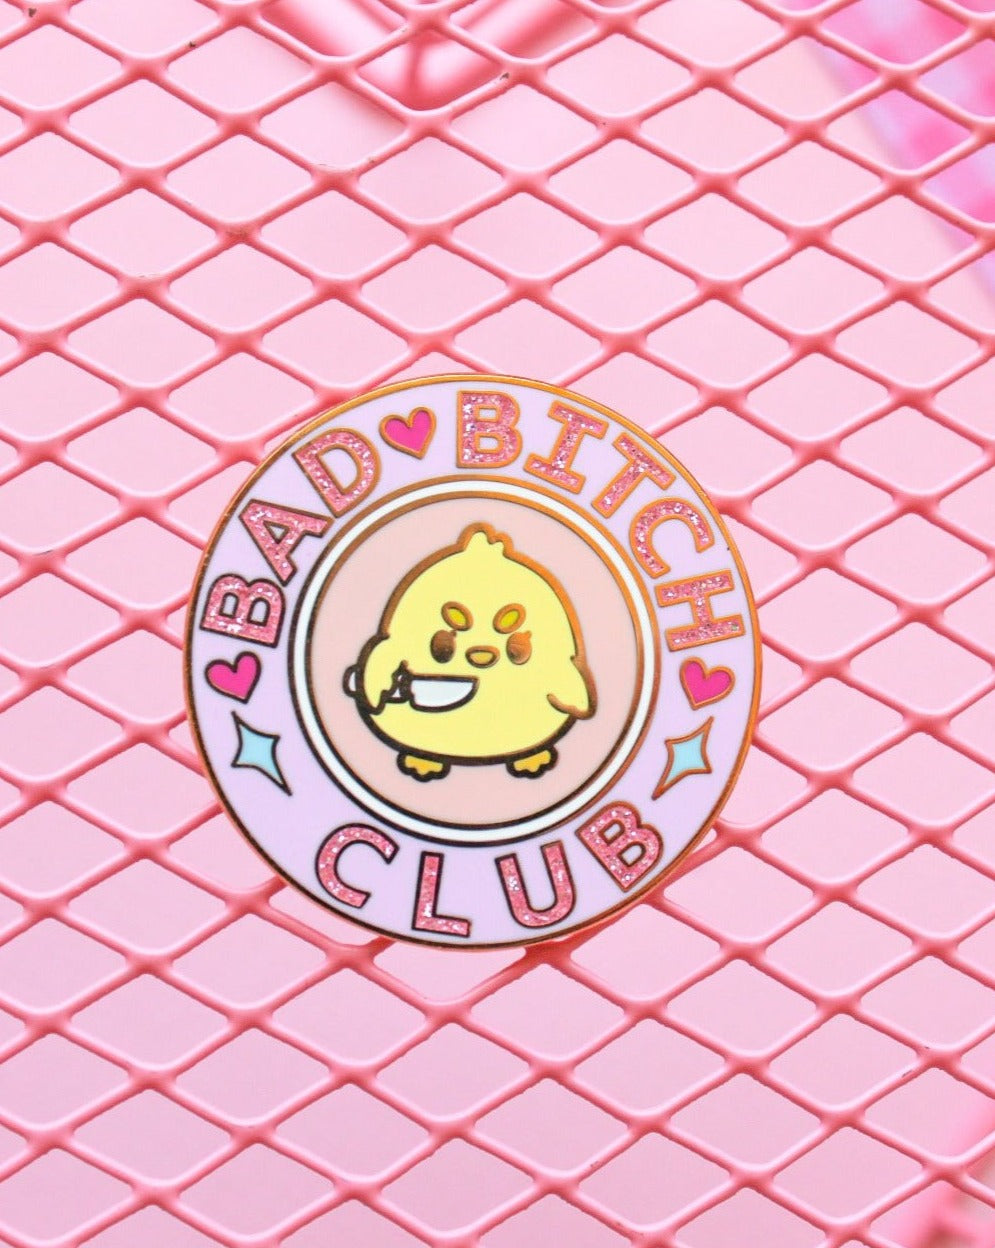 Bad Bitch Club Pin